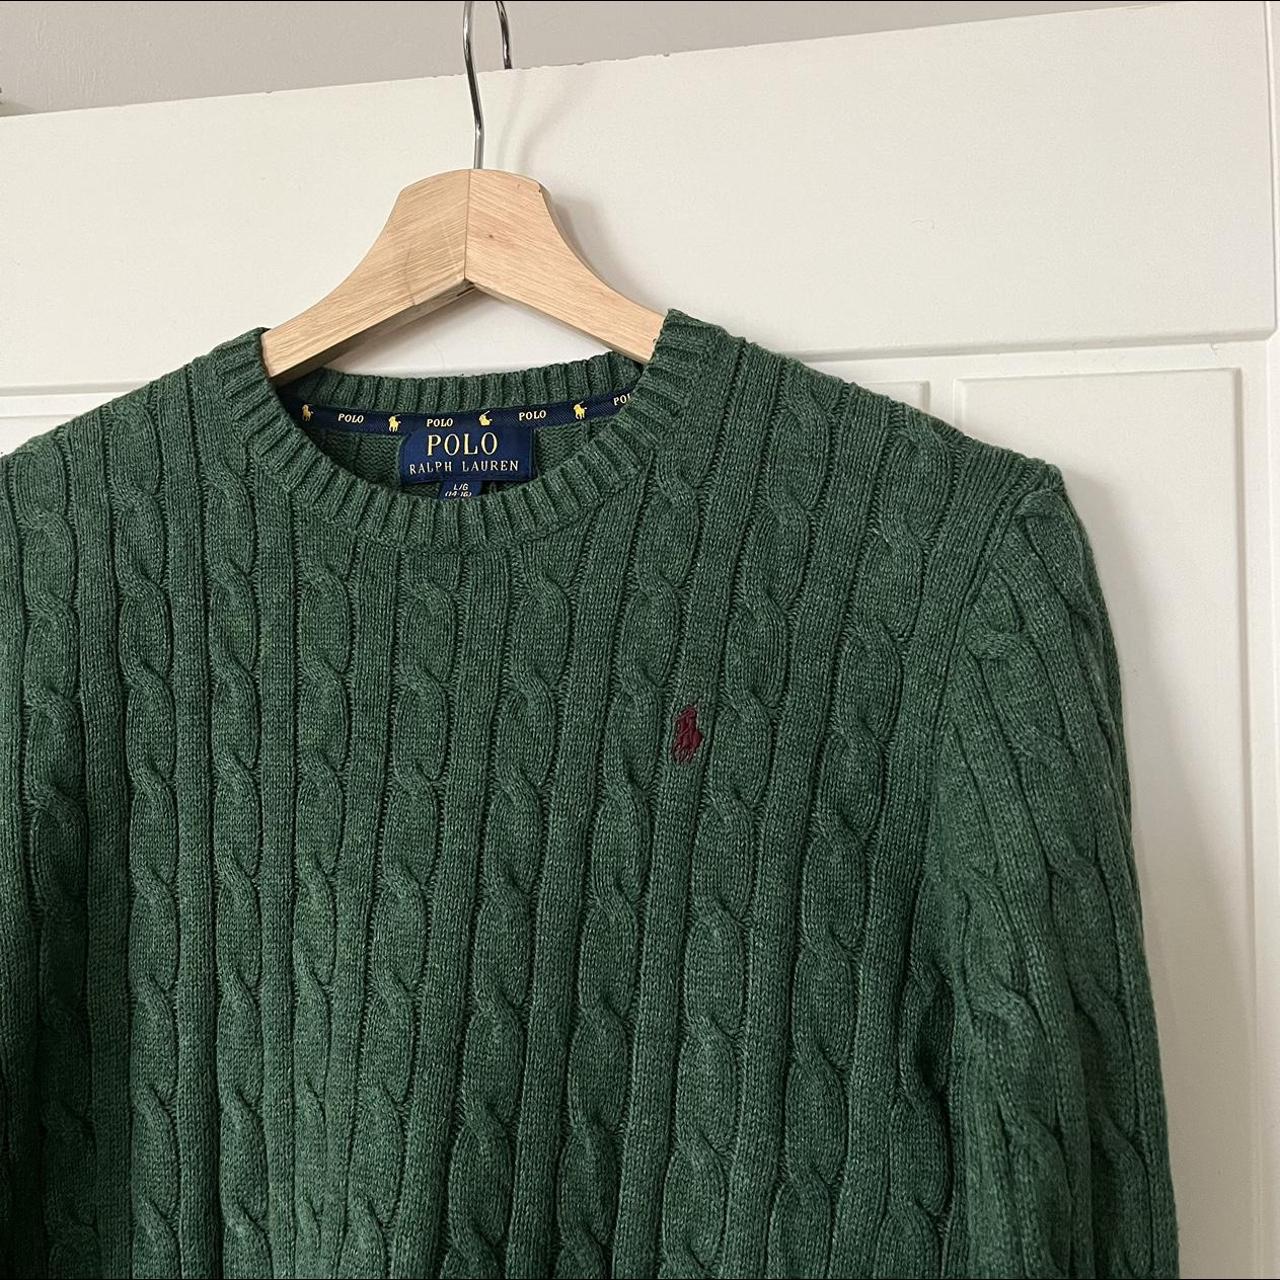 The cutest Ralph Lauren cable knit jumper in green -... - Depop